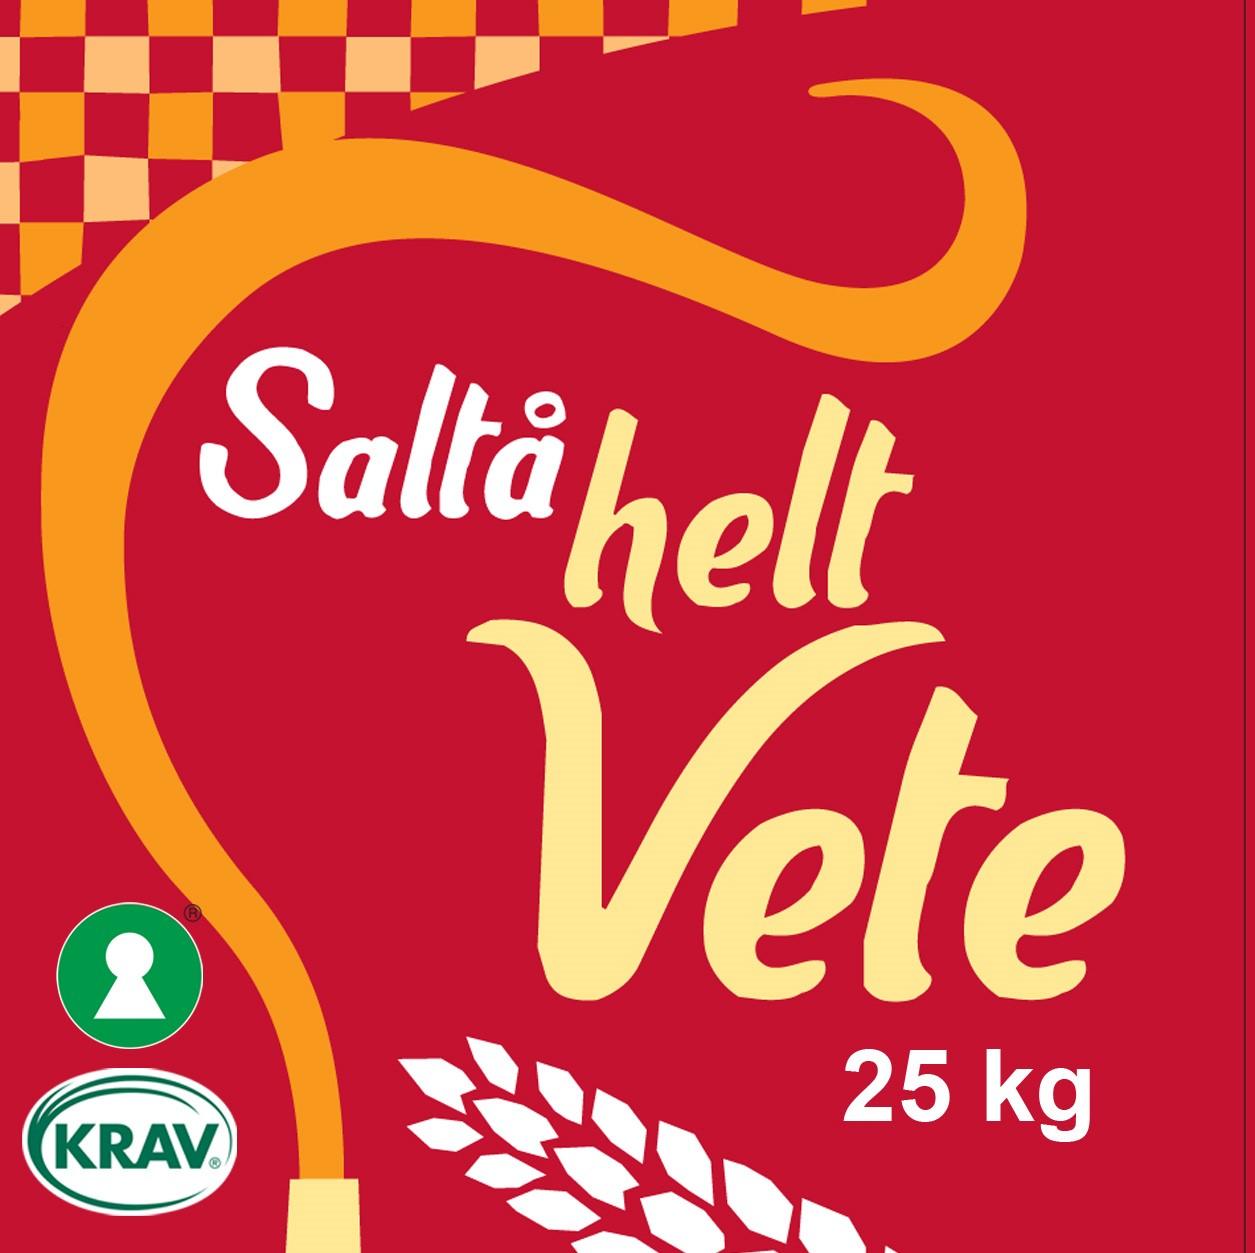 Saltå Kvarn's Wheat completely '